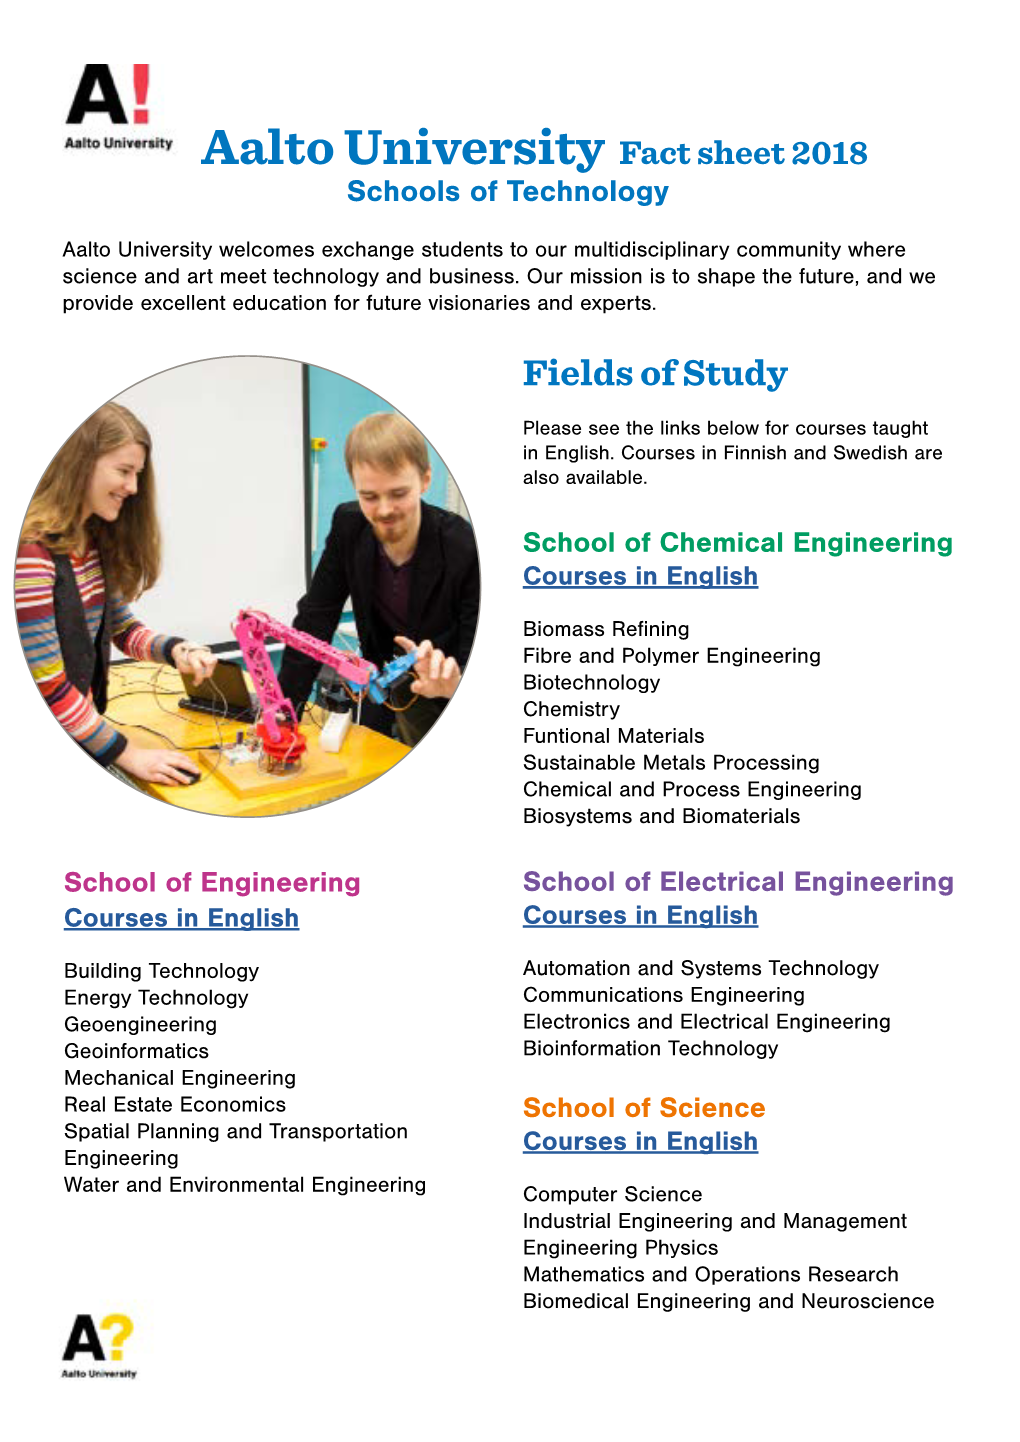 Aalto University Fact Sheet 2018 Schools of Technology